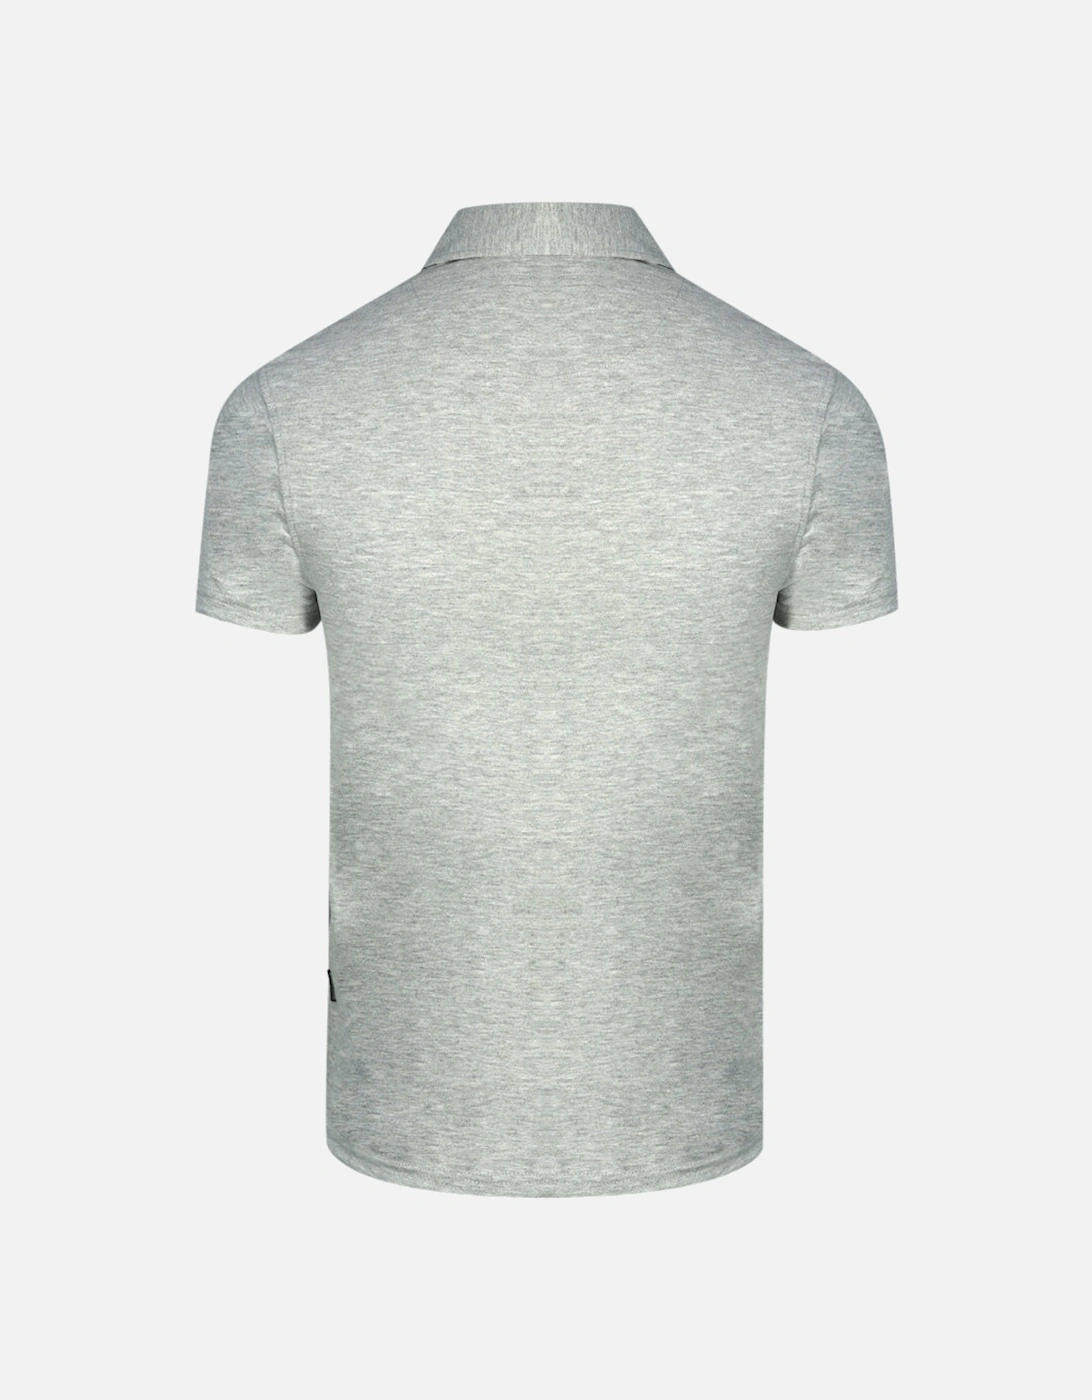 Aldis Crest Block Logo Grey Polo Shirt